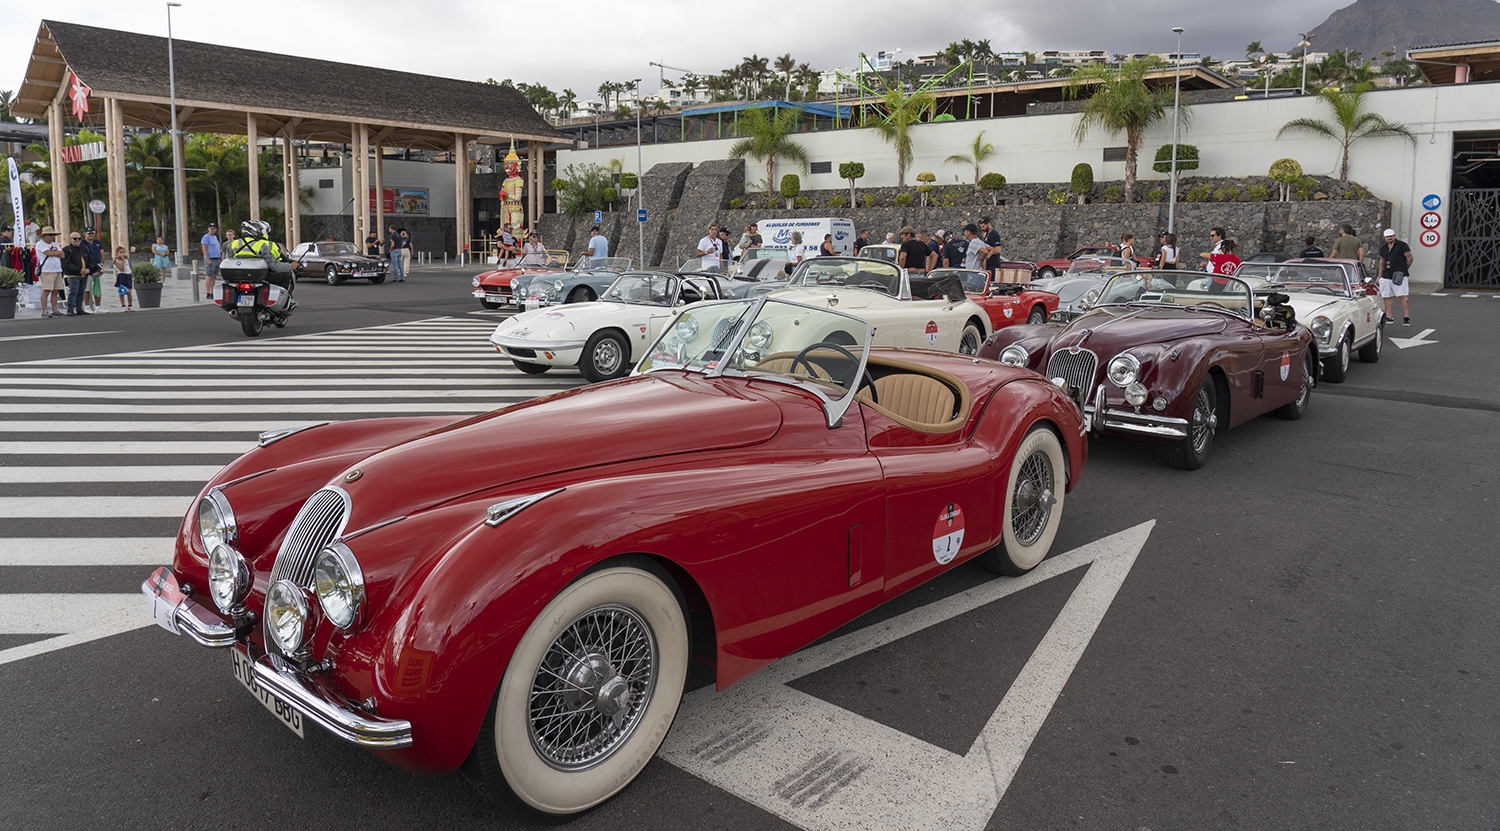 Jaguar XK en el parking del centro comercial Siam Mall en Tenerife | Foto: Clásica de Tenerife